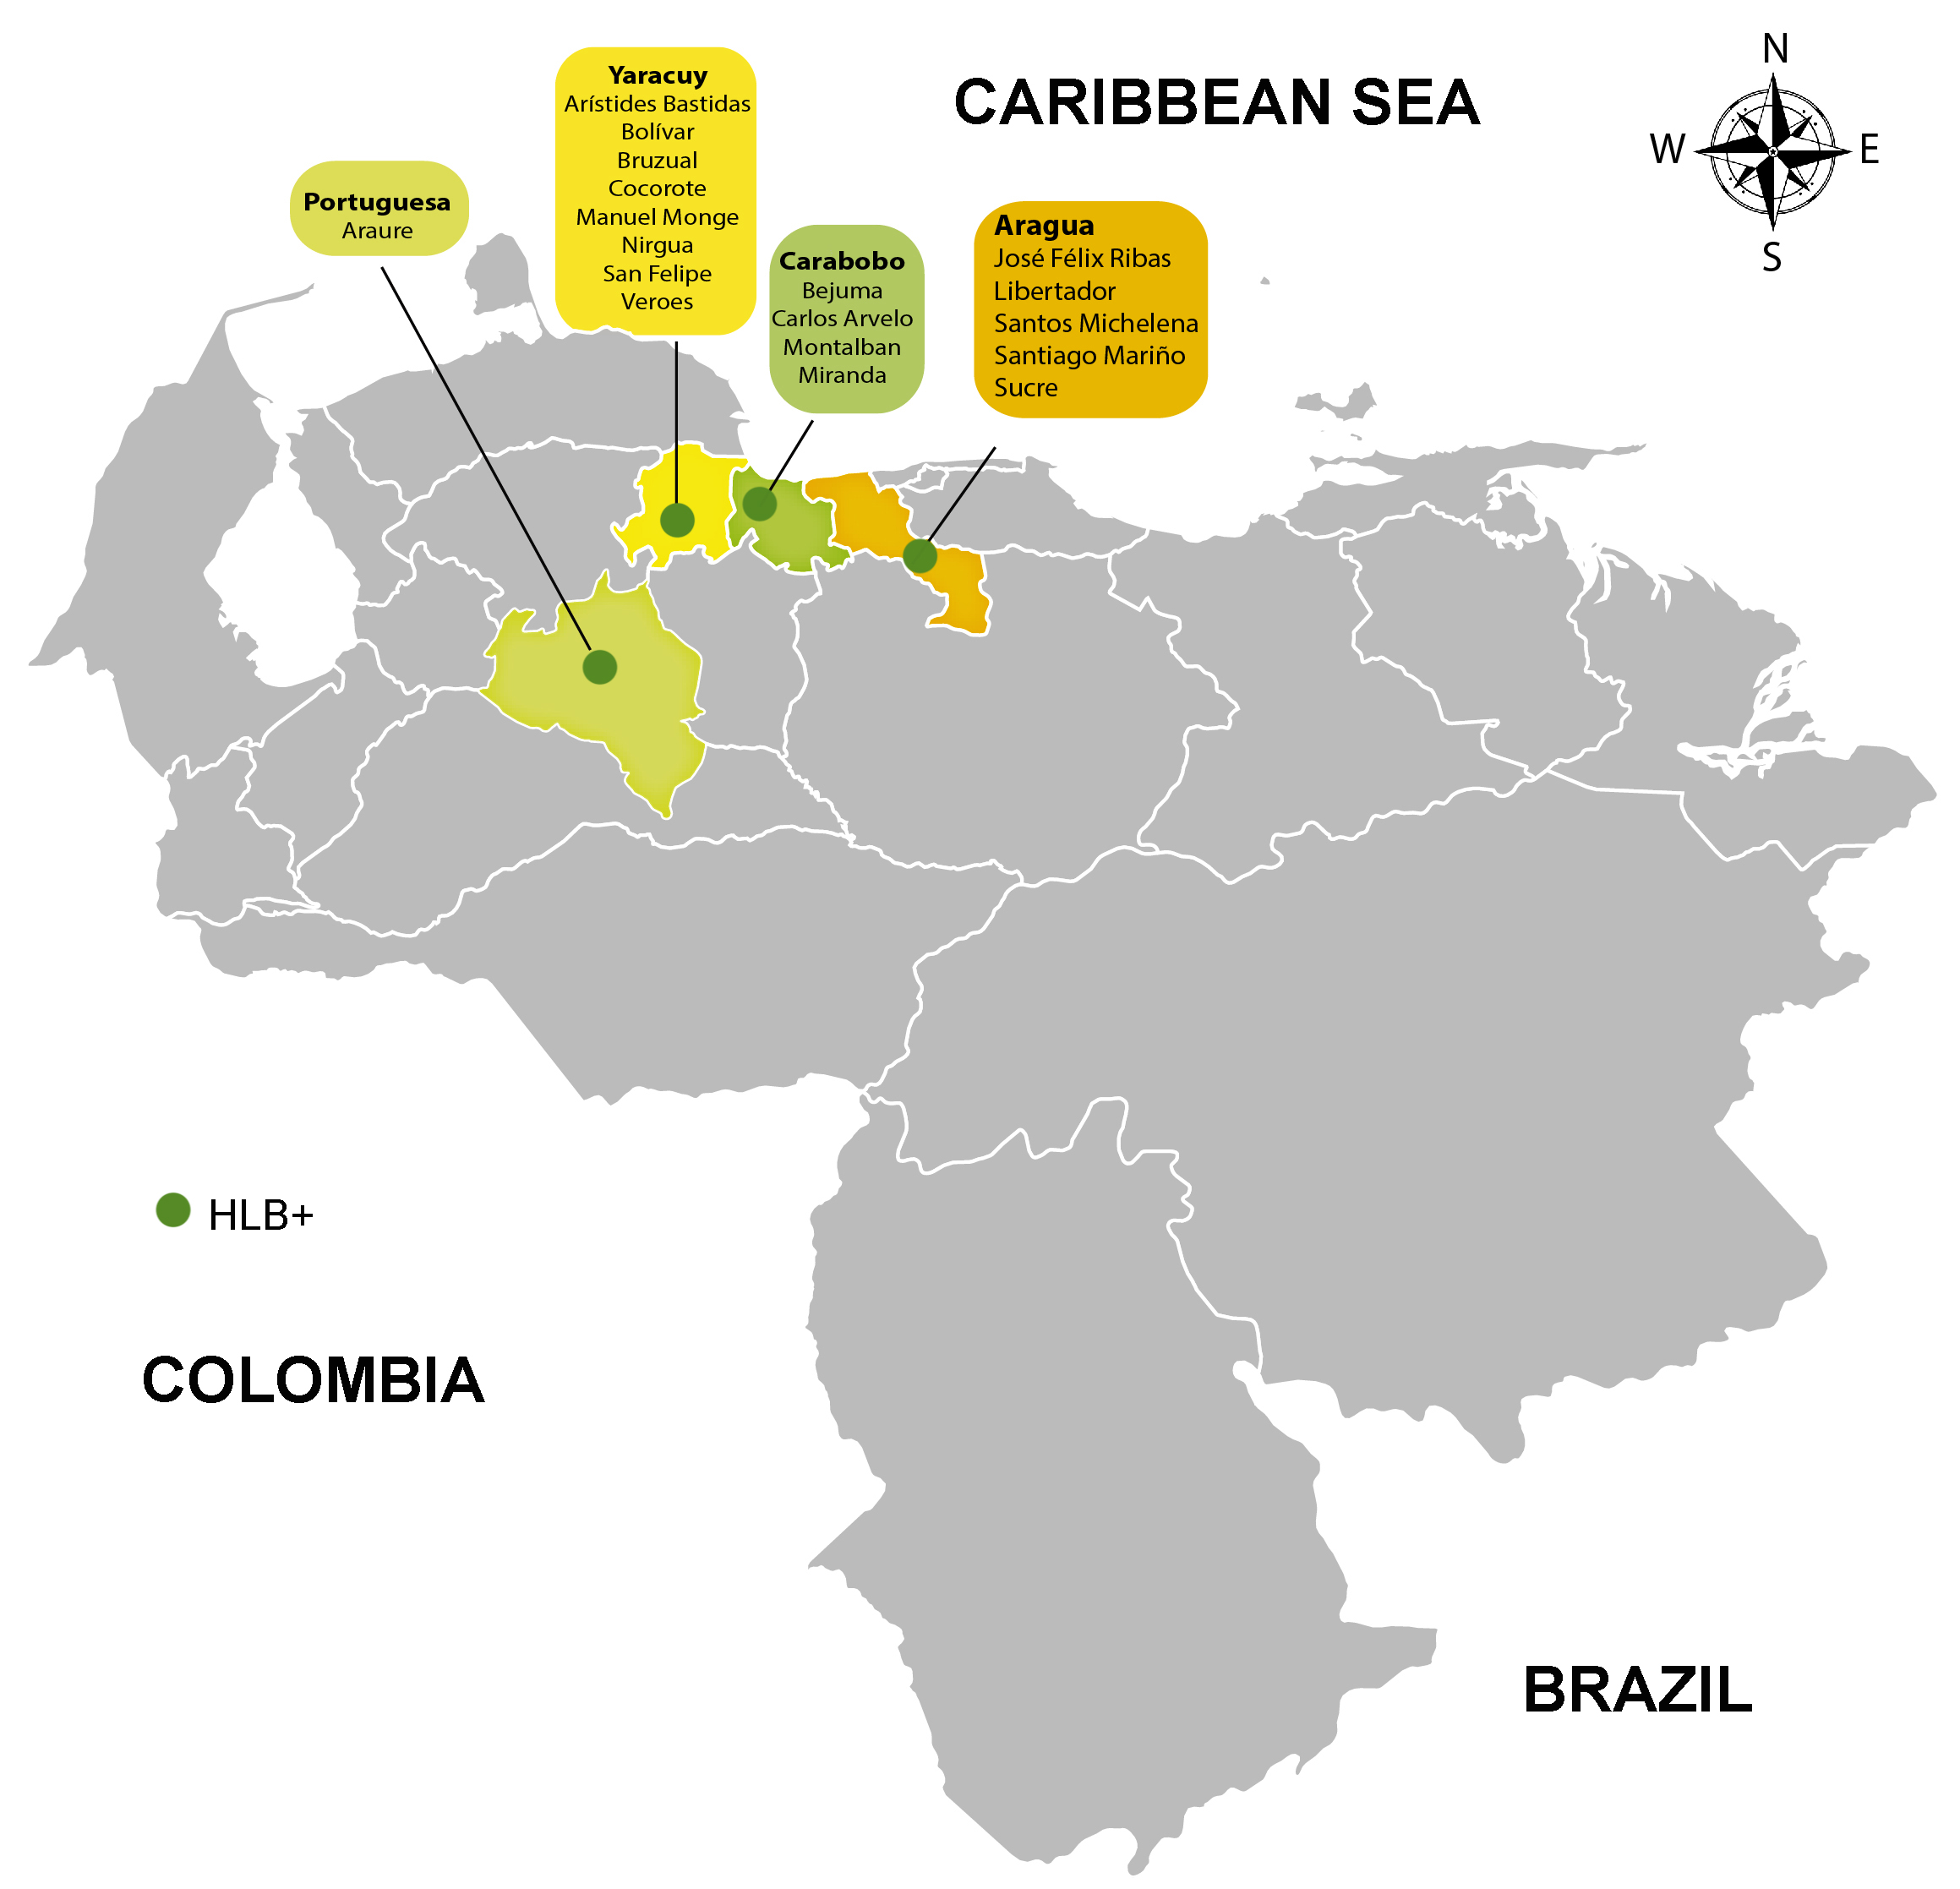 HLB-positives states in Venezuela